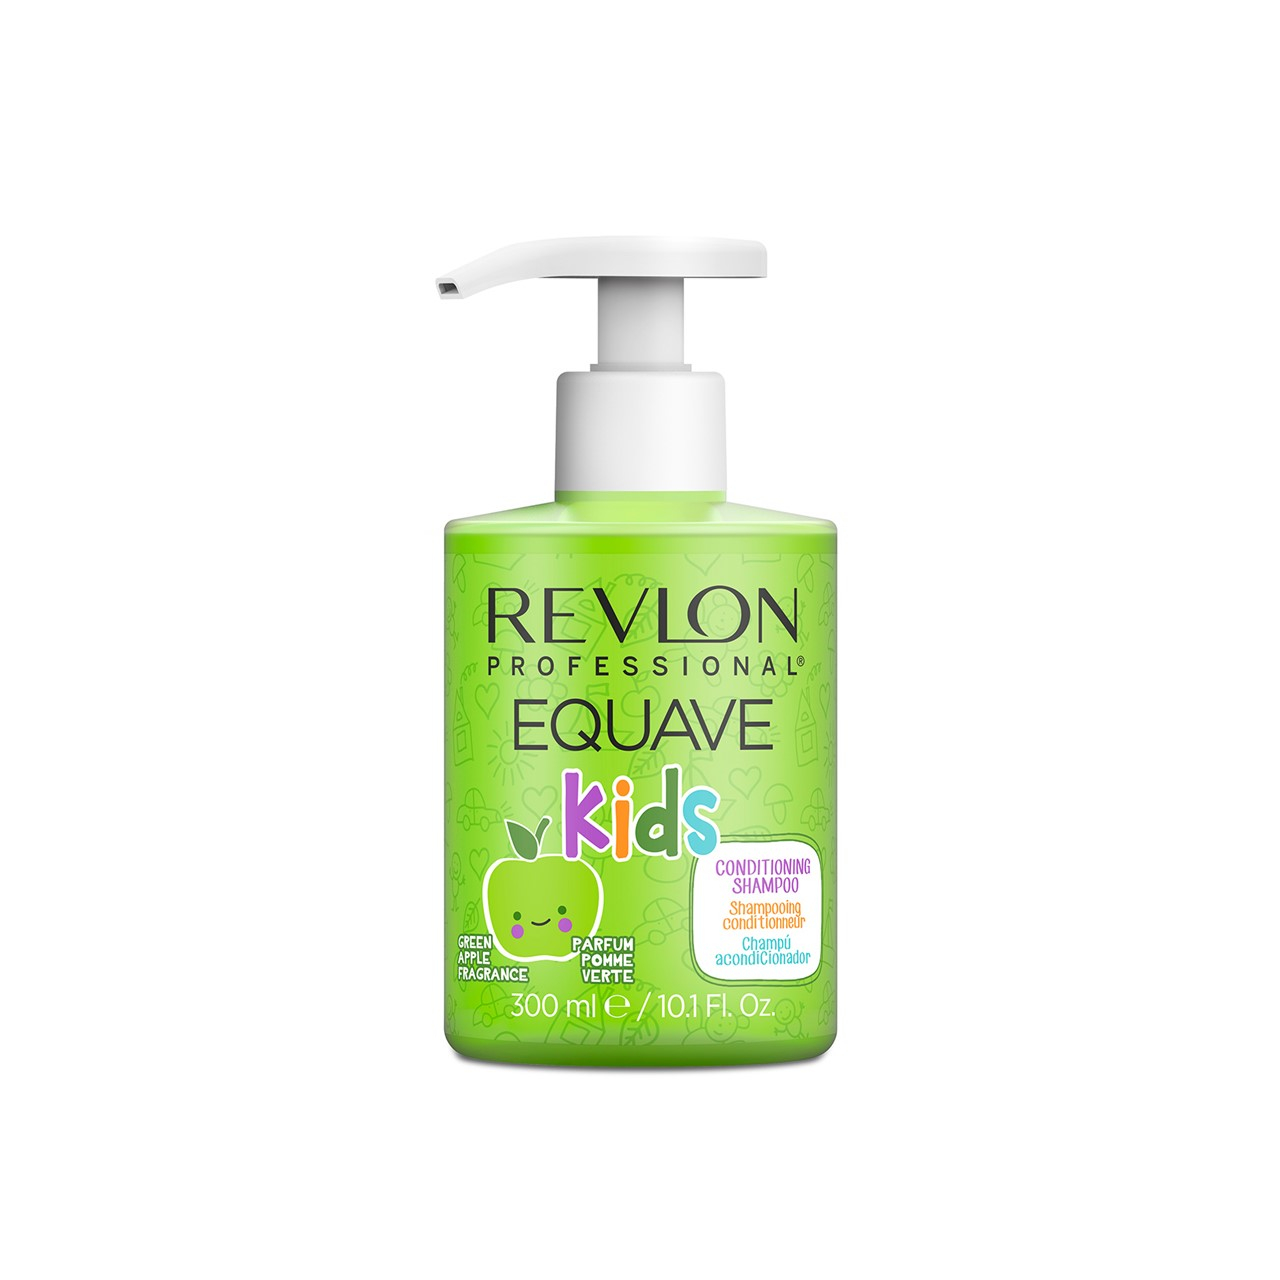 Revlon Professional Equave Kids Shampoo 300ml (10.14fl oz)